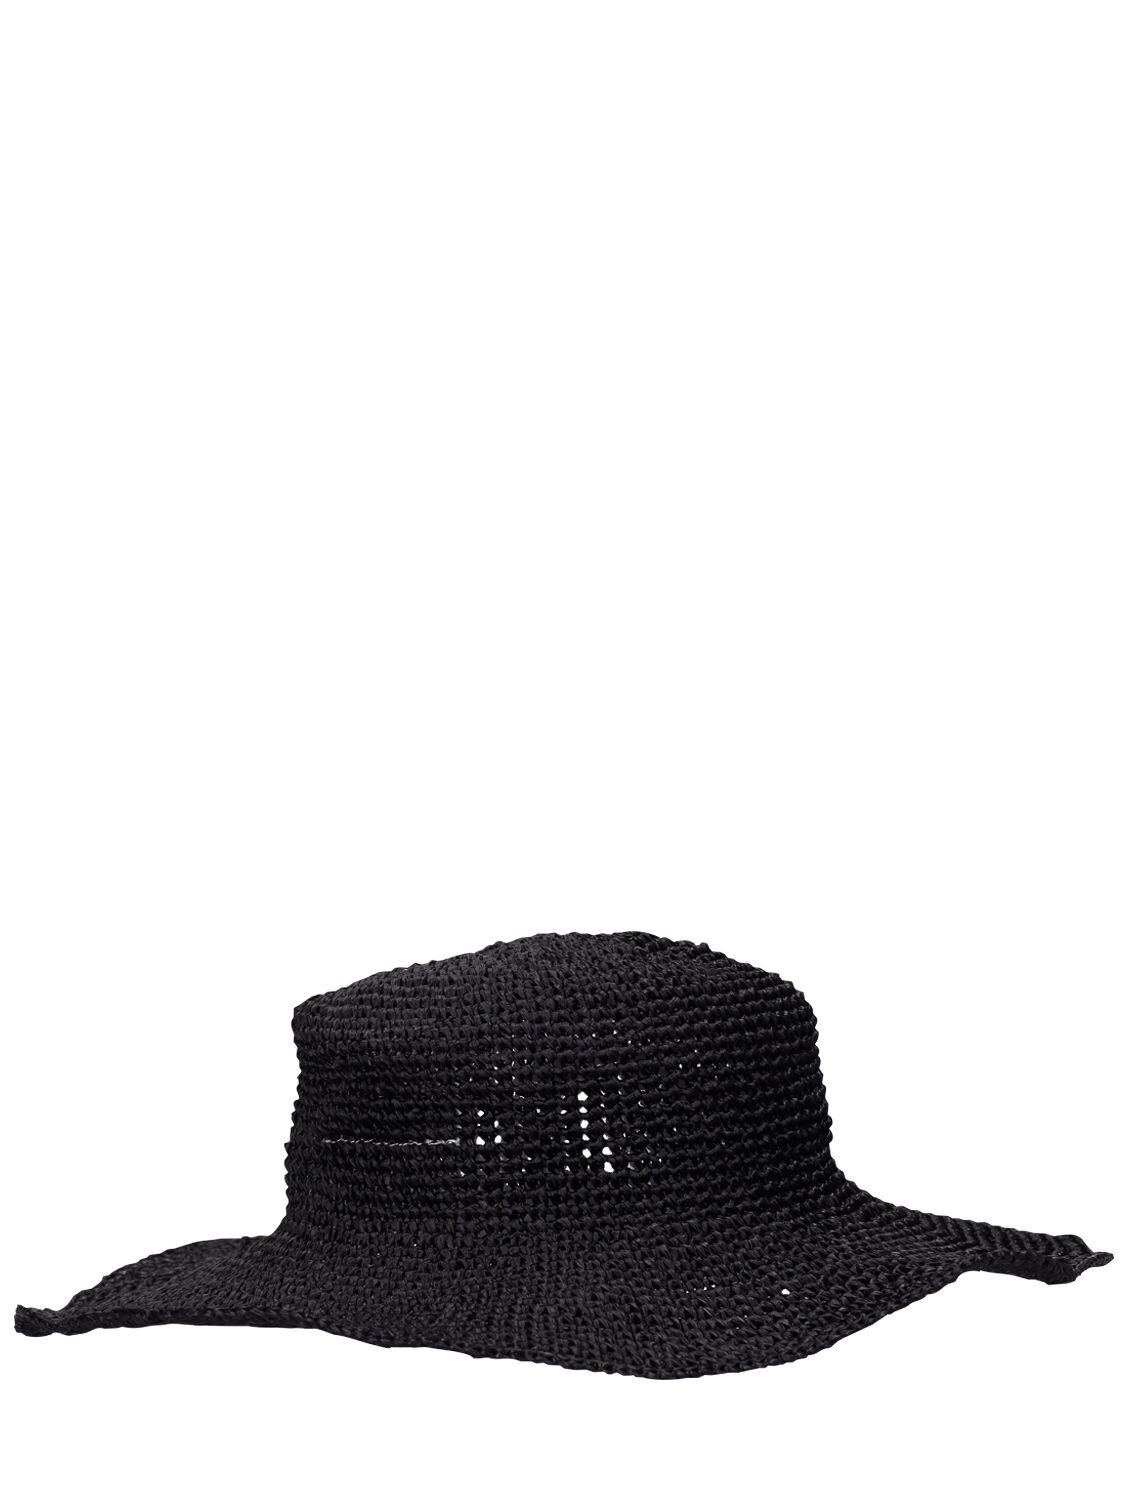 Mm6 Maison Margiela Black Raffia Beach Hat | ModeSens